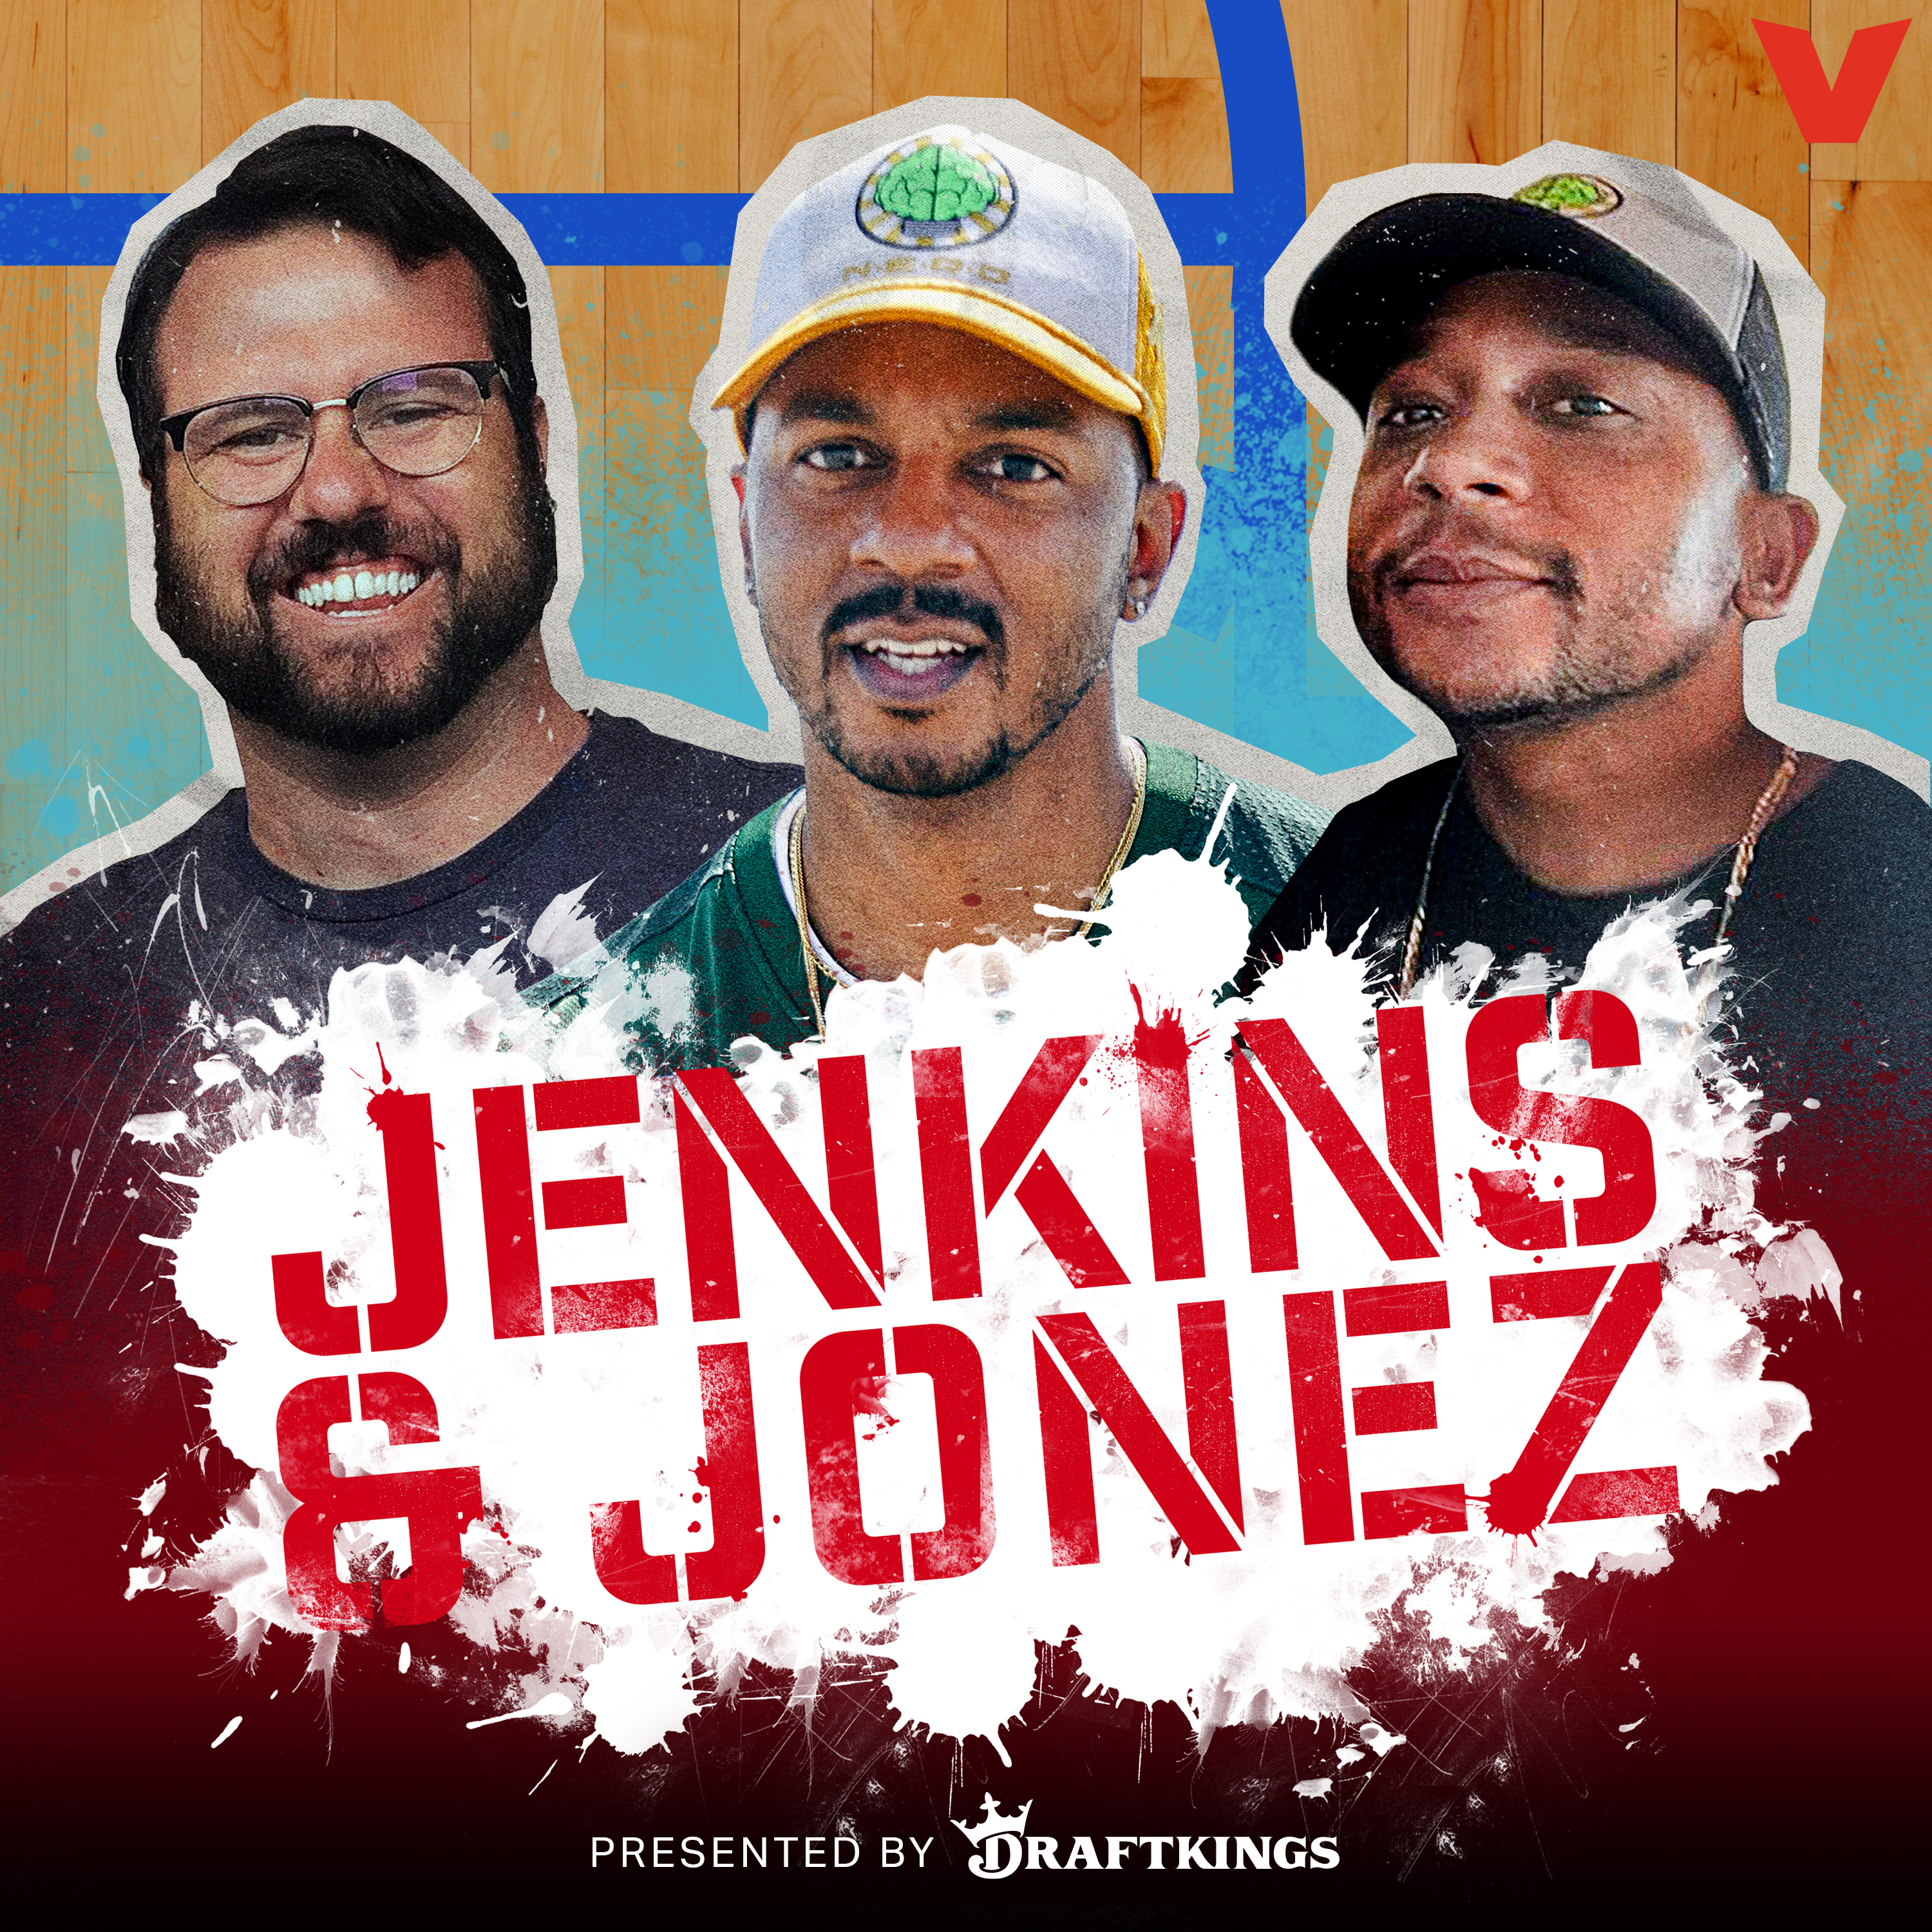 Jenkins and Jonez - OUR Detroit Pistons